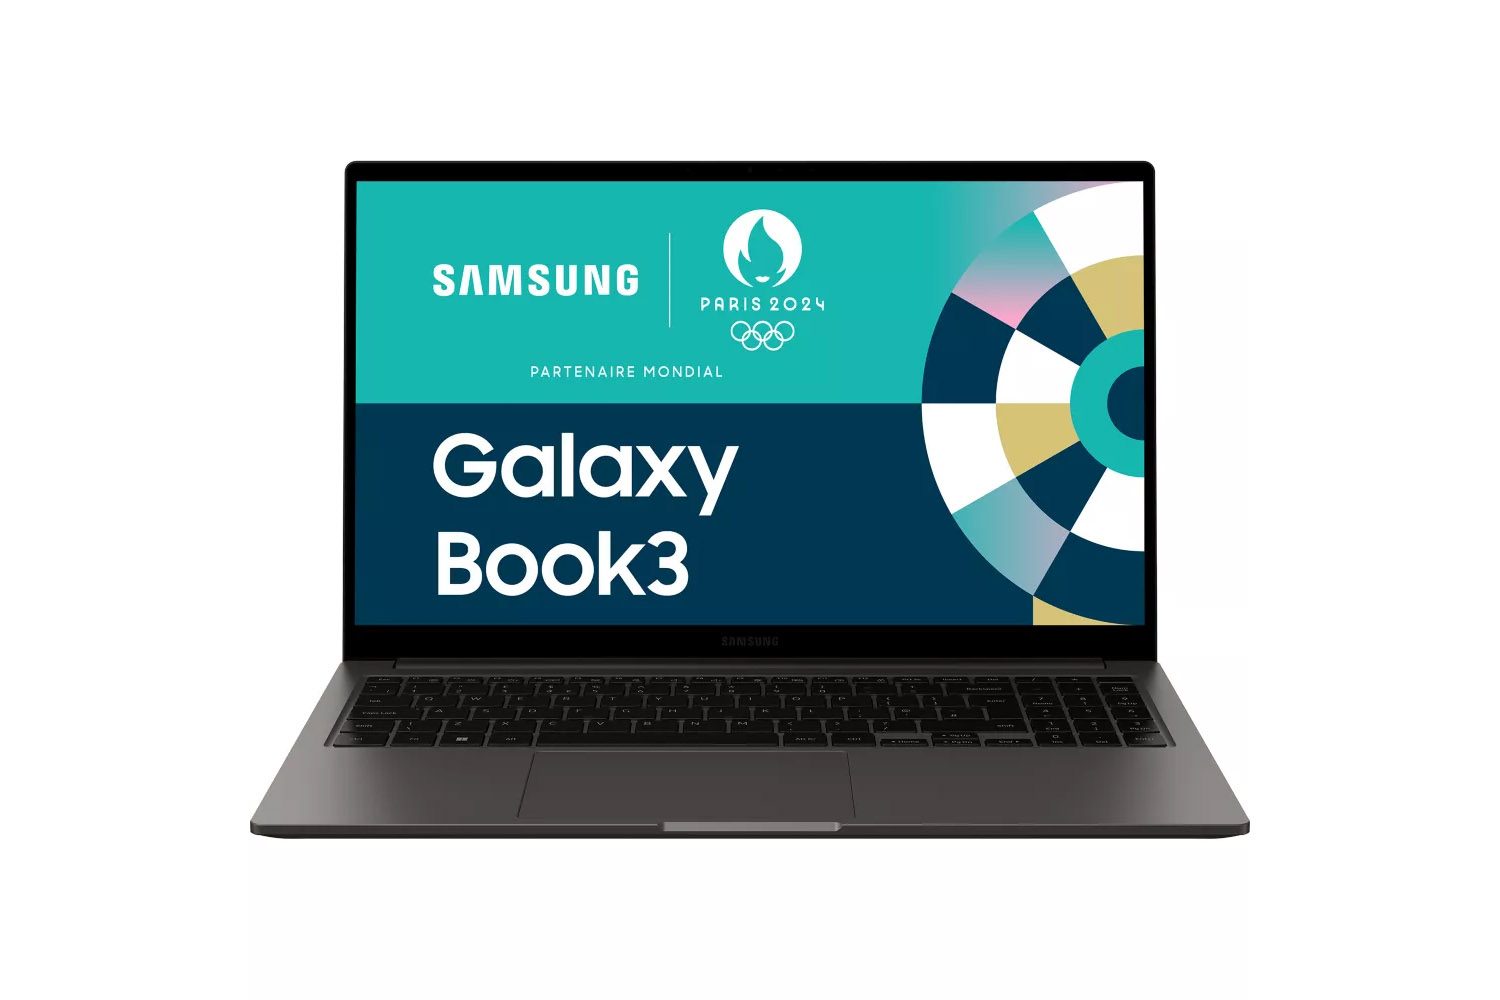 Samsung Galaxy Book 3